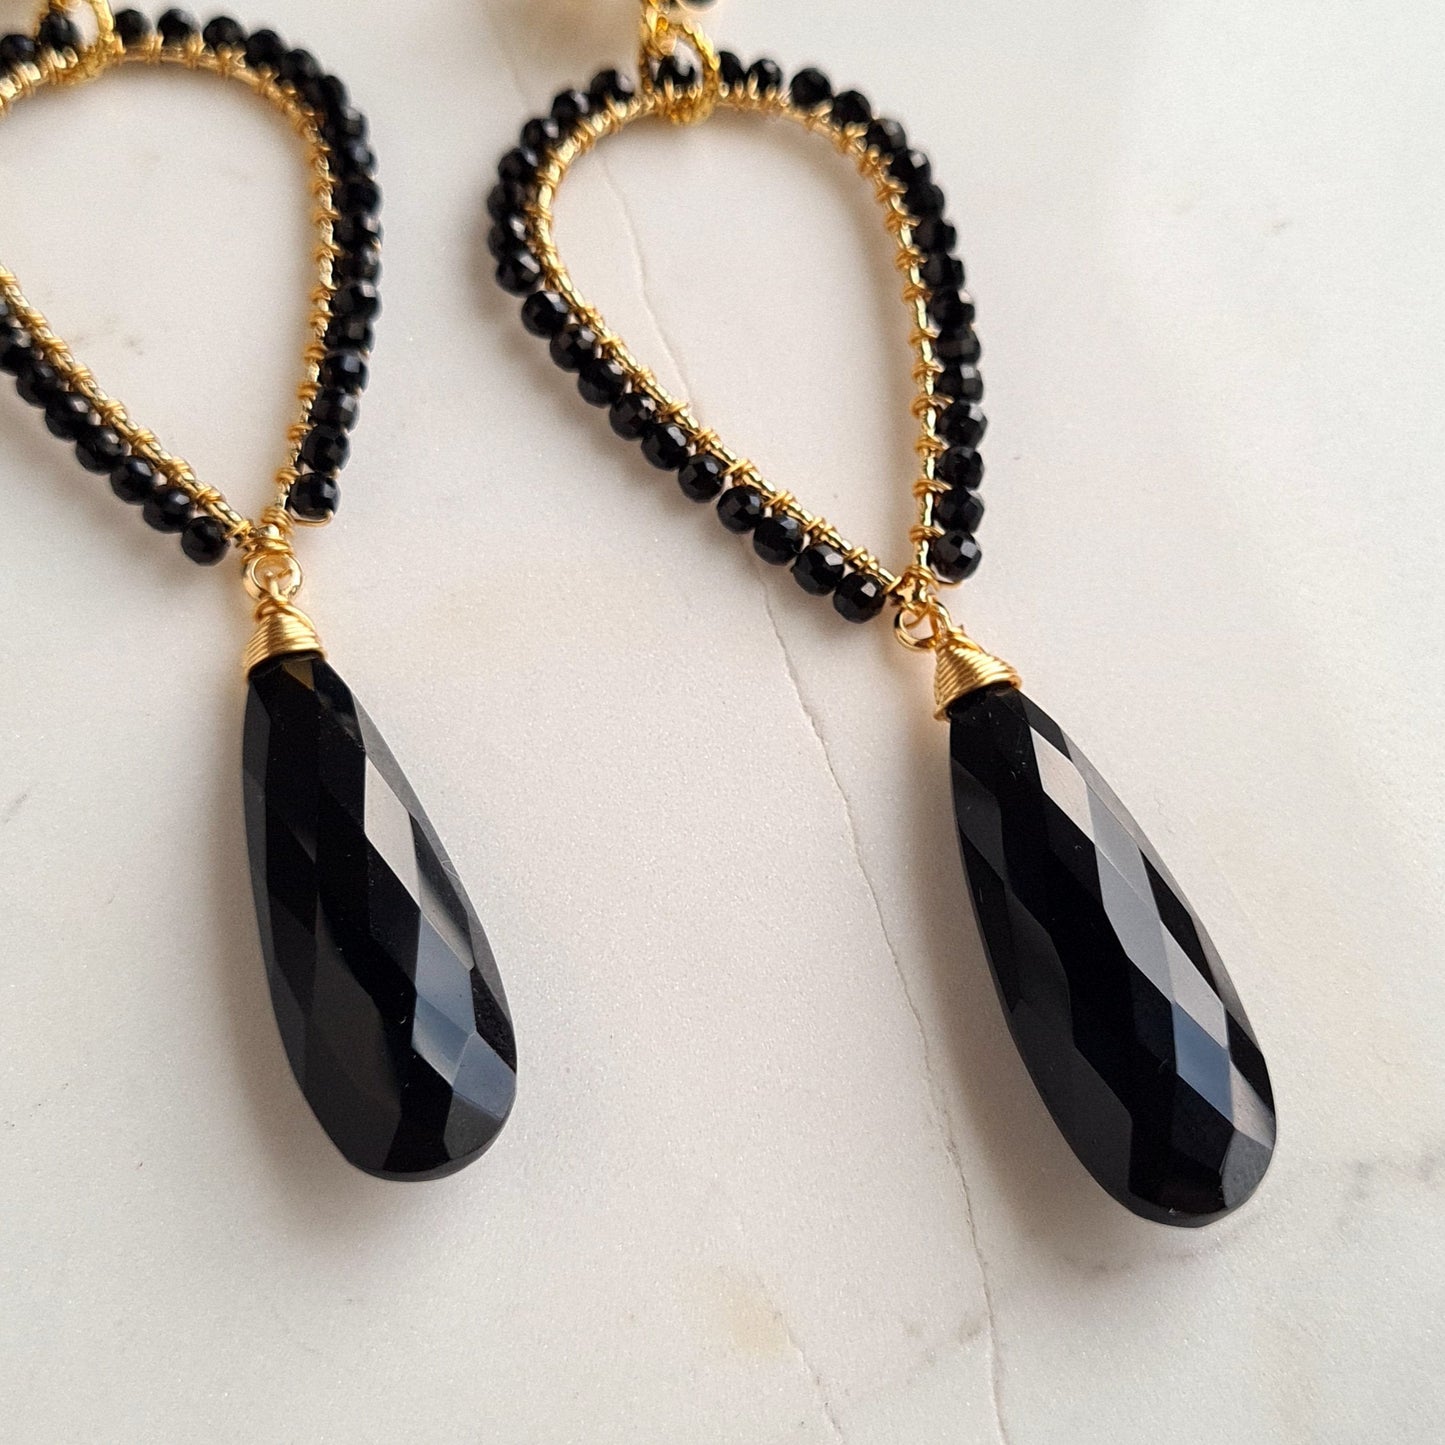 Black Onyx & Black Spinel Inverted Tear Drop Gemstone Earrings